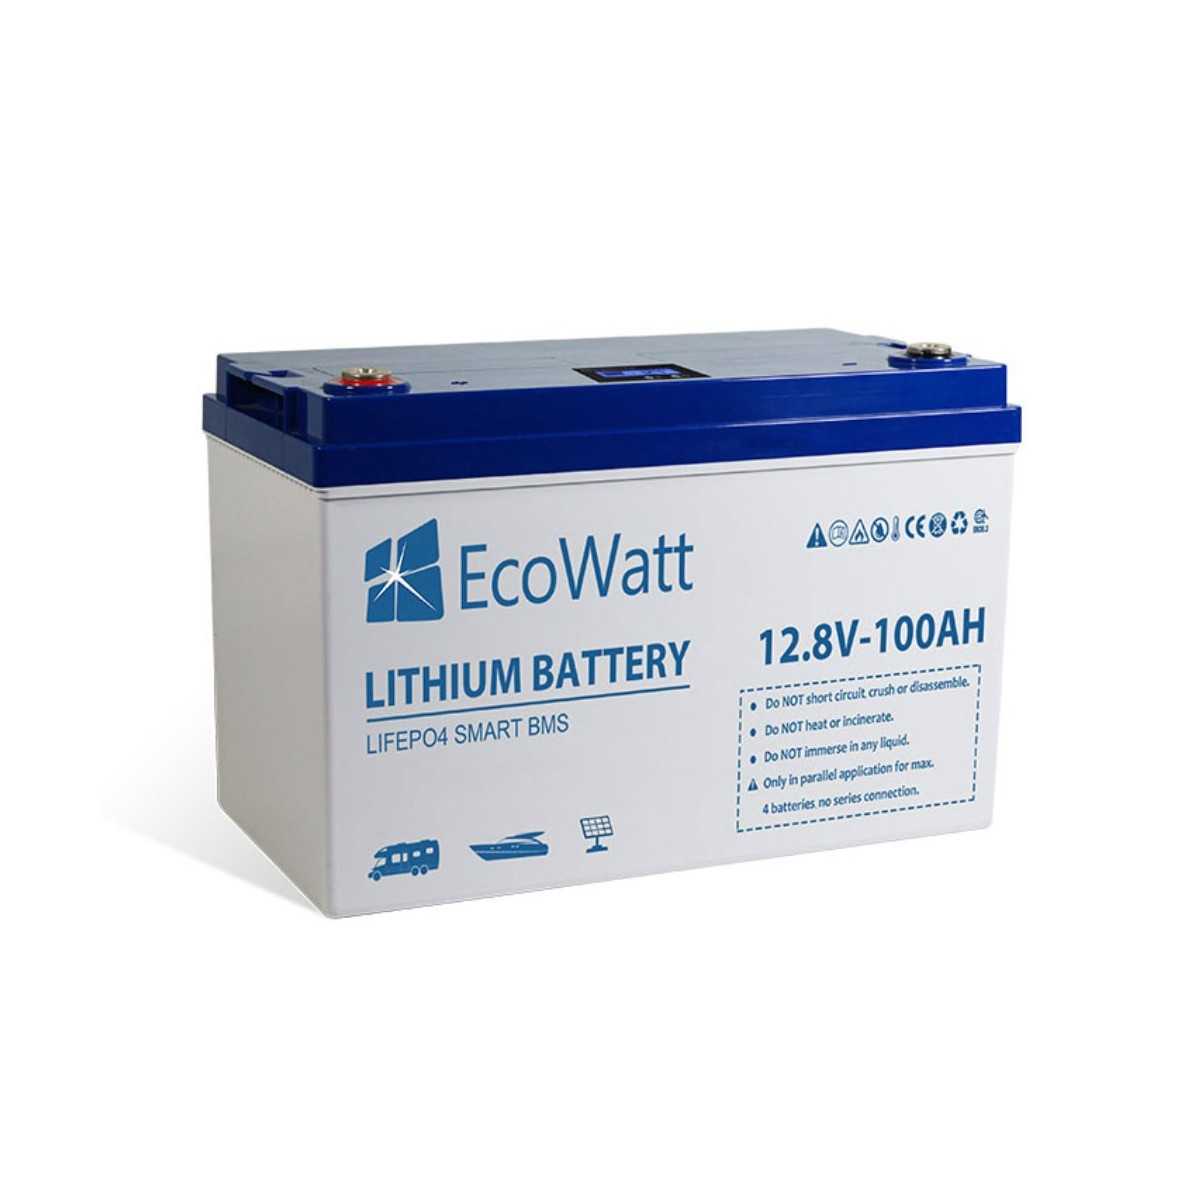 Ecowatt 12.8V 100Ah LiFePO4 Battery with integrated BMS Smart